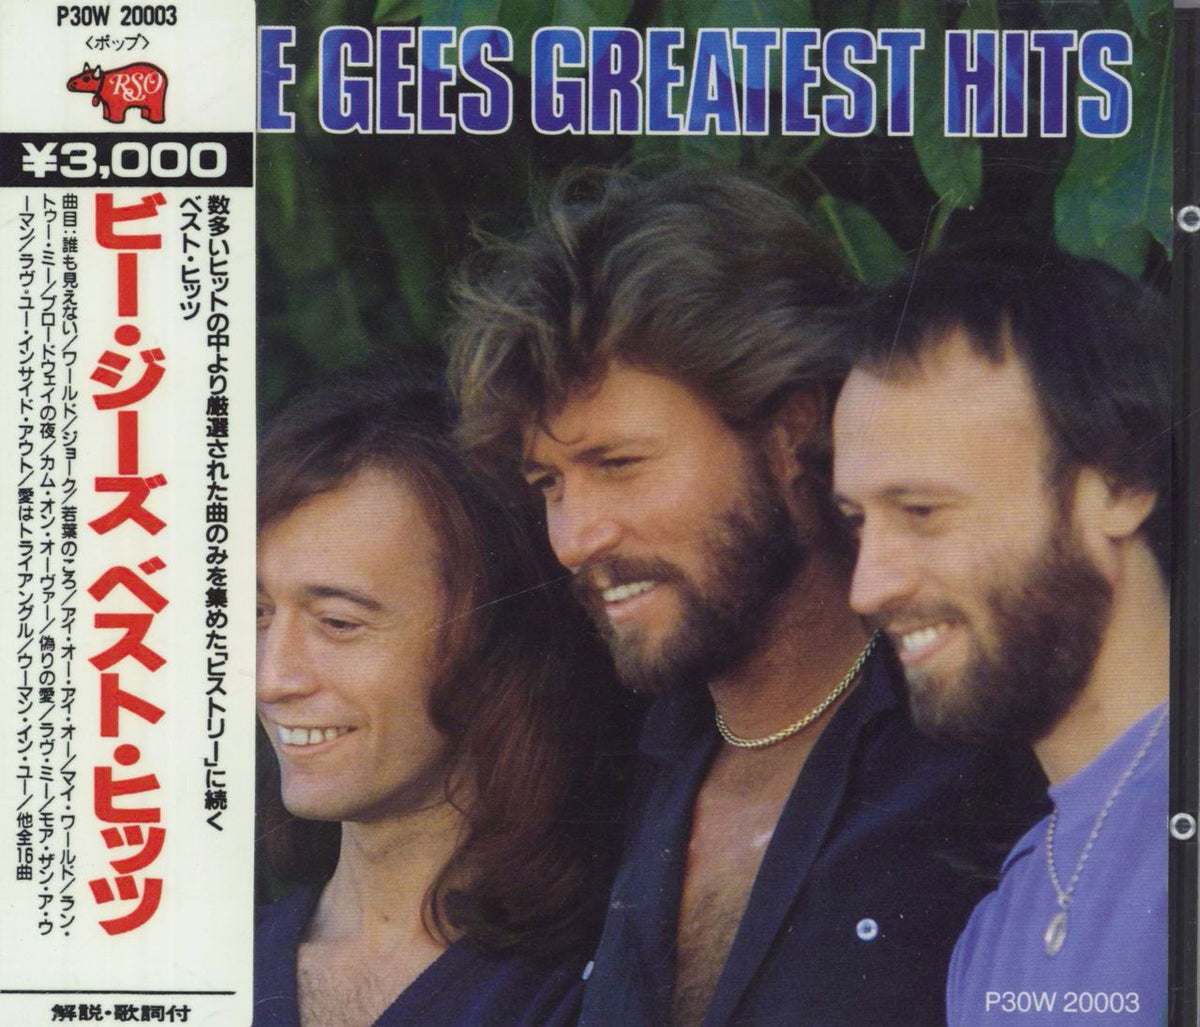 The Bee Gees Greatest Hits Japanese CD album — RareVinyl.com